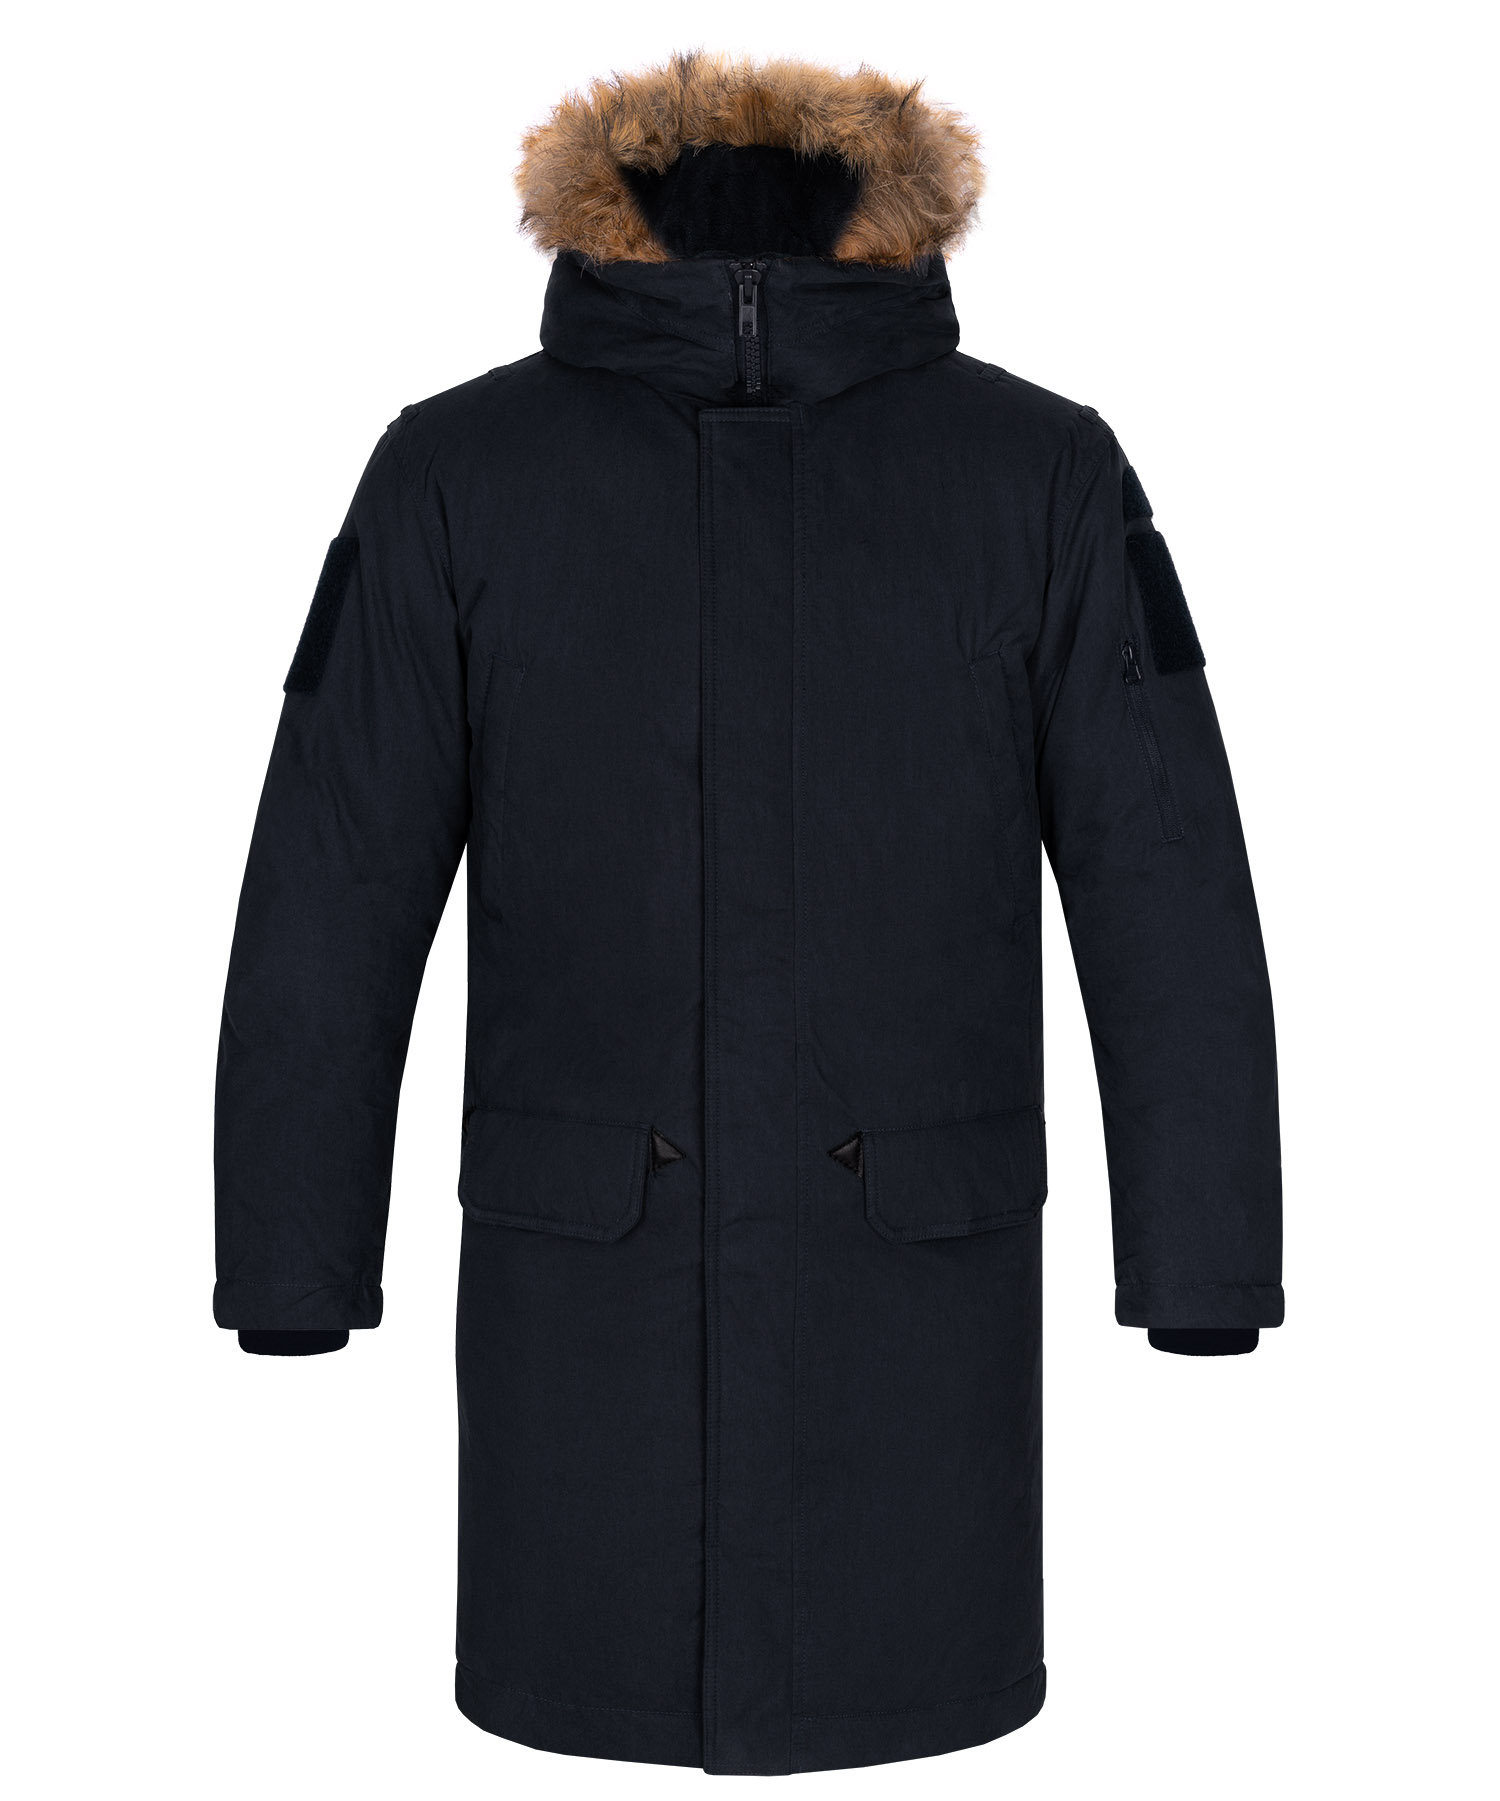 Куртка пуховая Forester К VR, цвет черный 1, размер 42/170 - фото 1